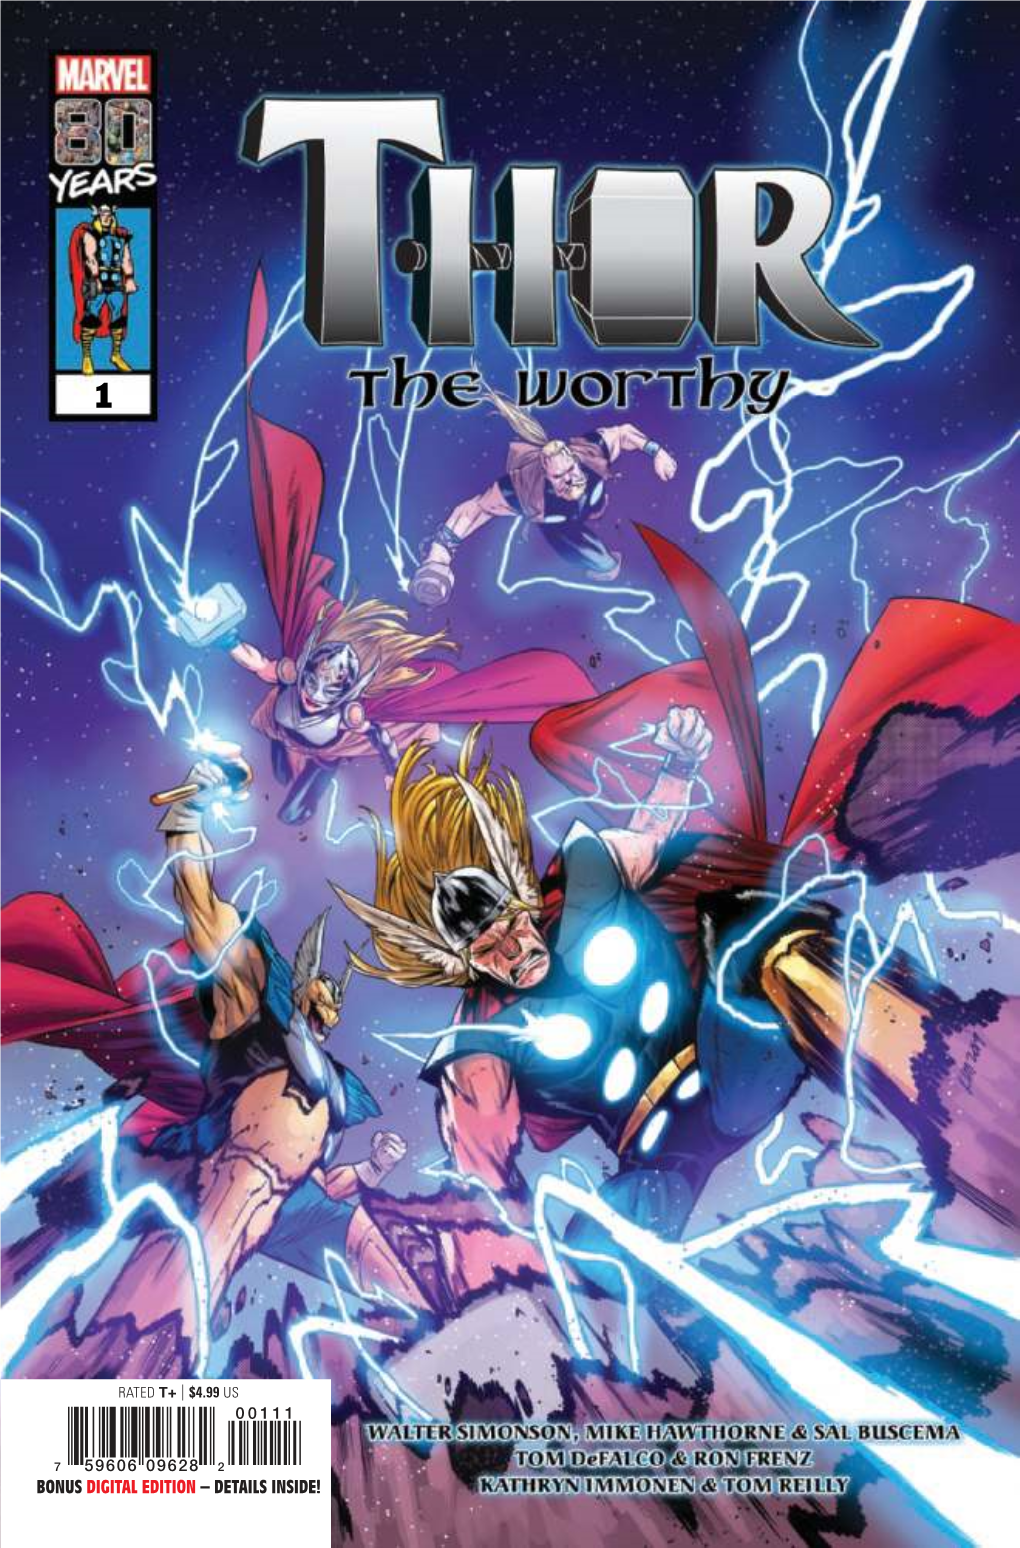 Bonus Digital Edition – Details Inside! Thor Odinson Is the God of Thunder and Protector of Midgard